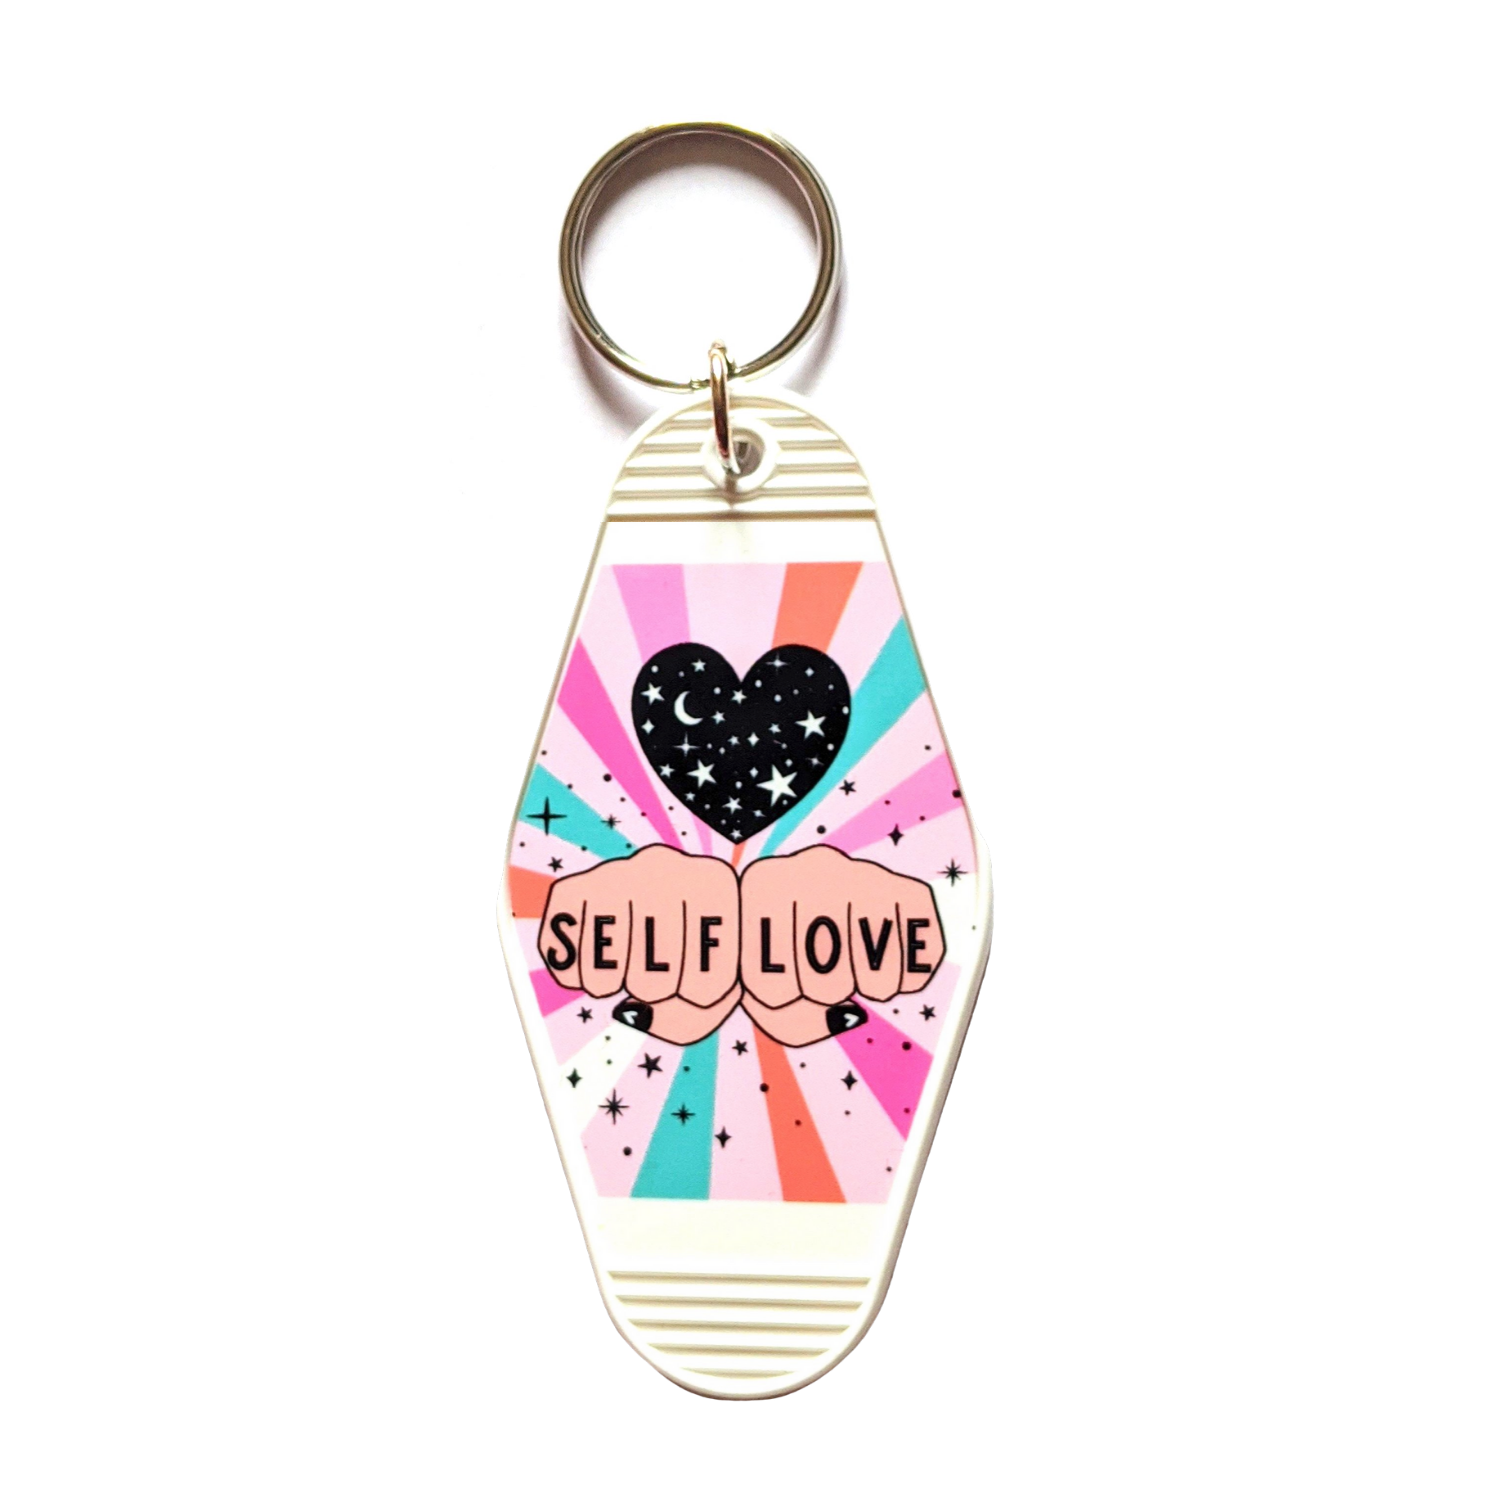 Self Love Motel Style Illustrated Keychain - White, Pastel Rainbow, Tattoo Inspired